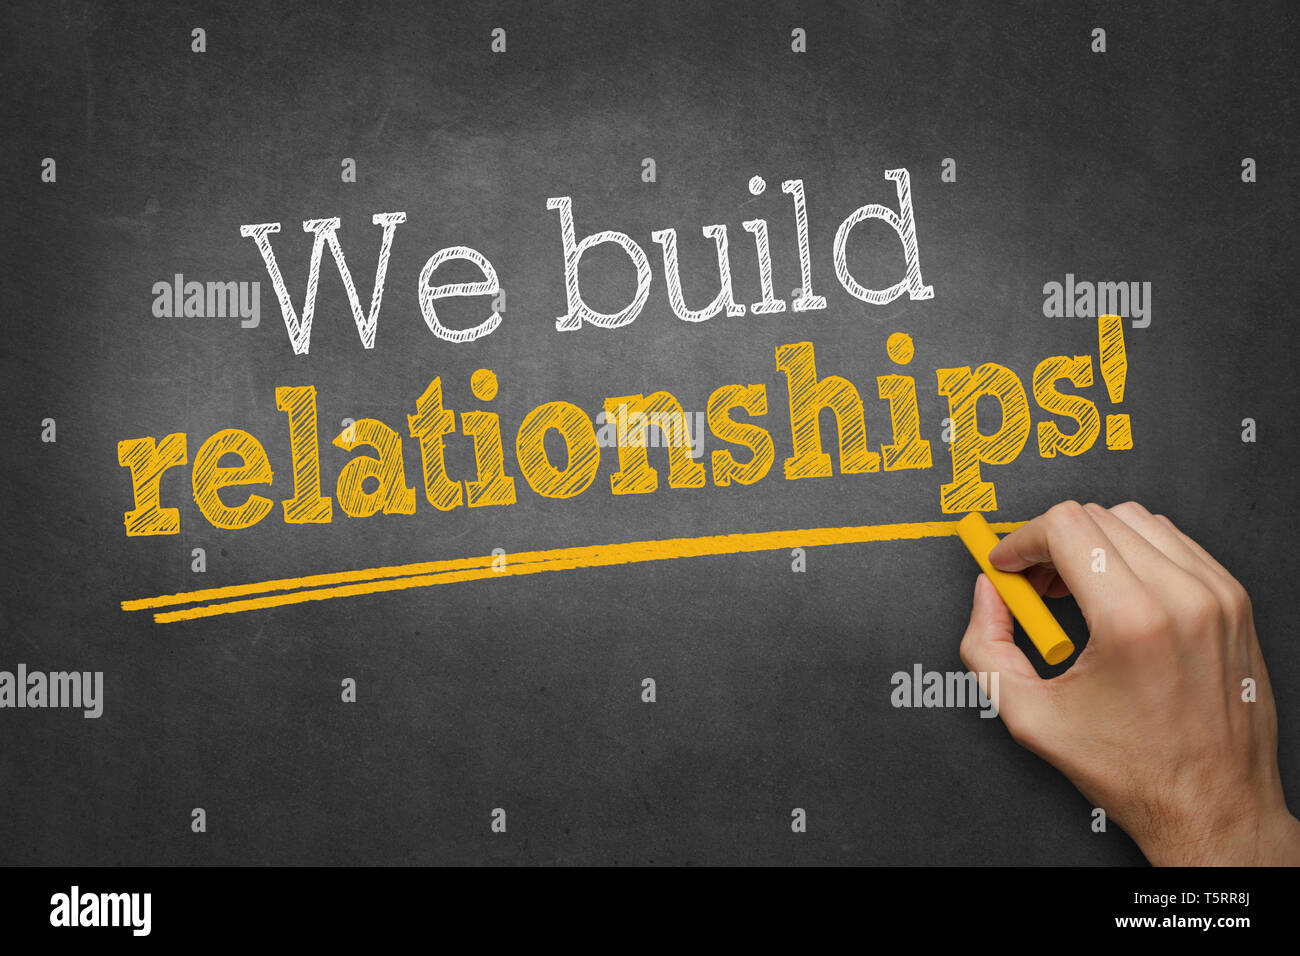 hand writes on chalkboard - We build relationships! Stock Photo